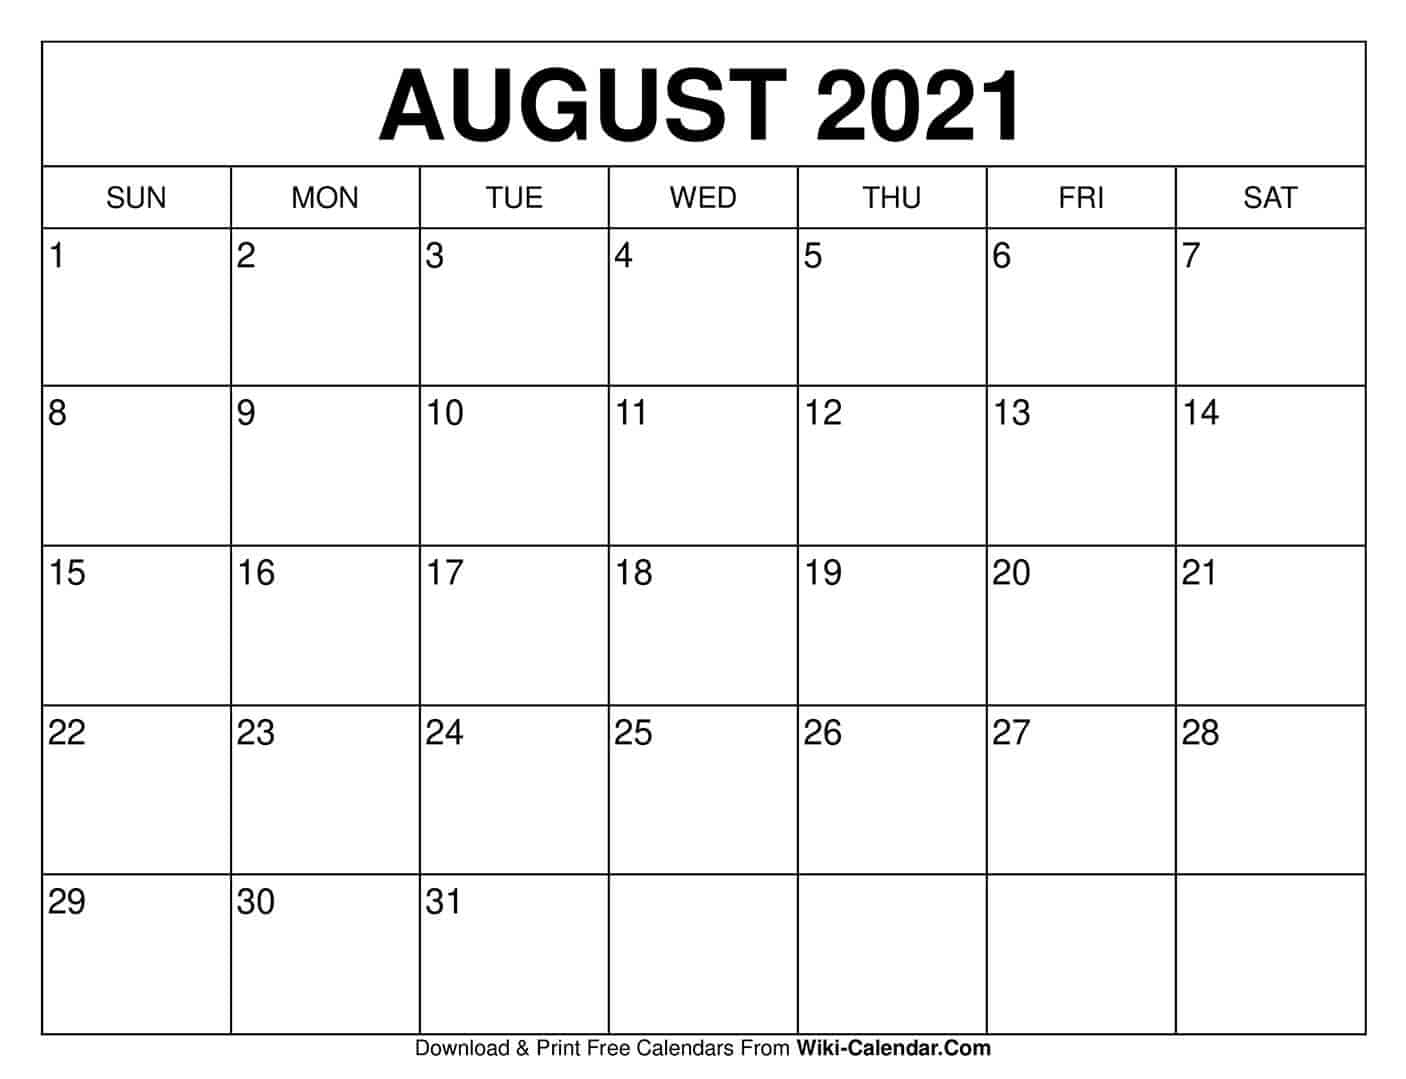 Free Printable August 2021 Calendar With Holidays Crownflourmills